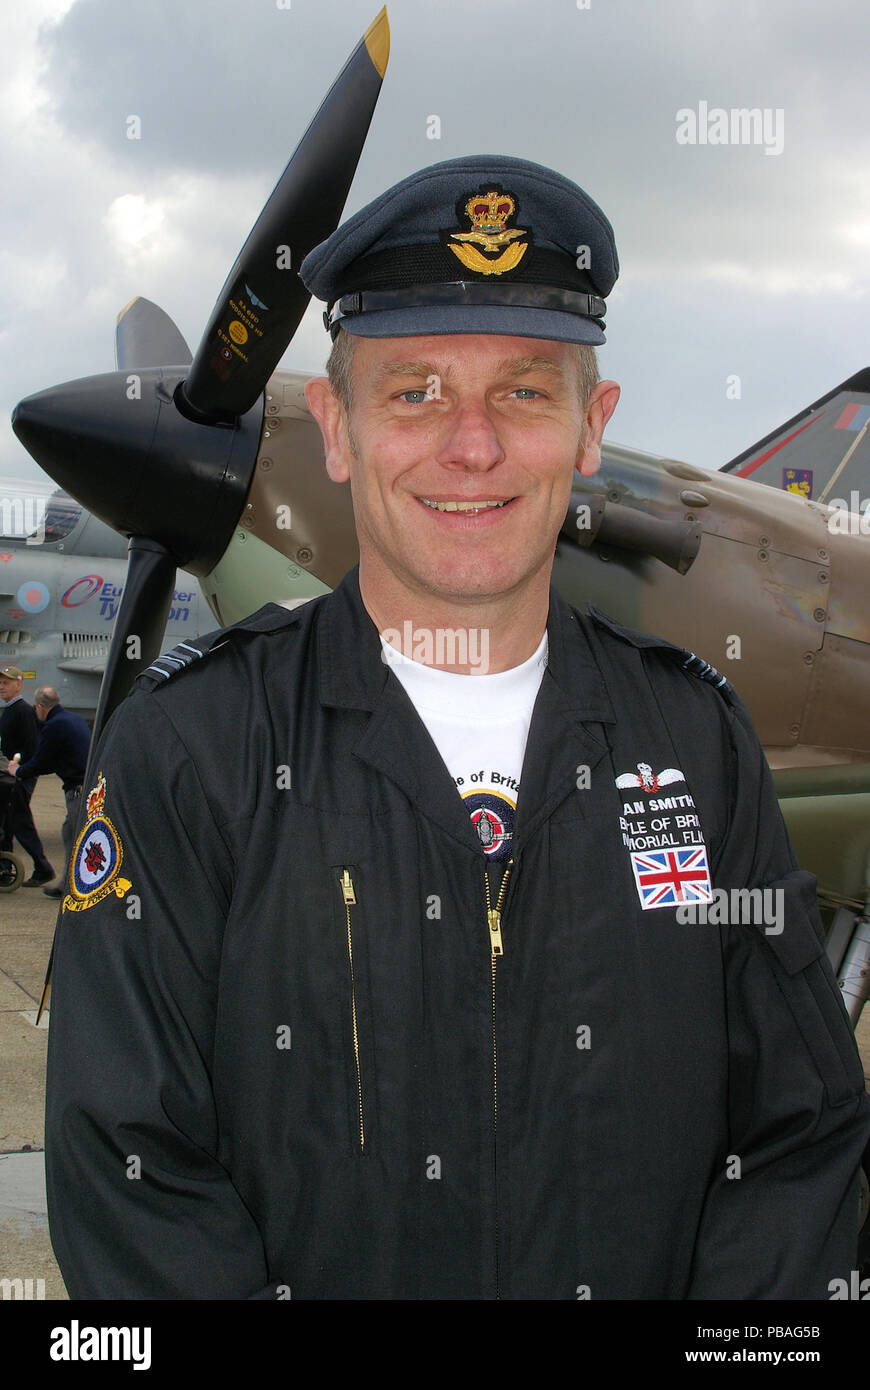 Officier commandant de la Royal Air Force, RAF Battle of Britain Memorial Flight Pilot Sqn LDR Ian Smith en uniforme Banque D'Images